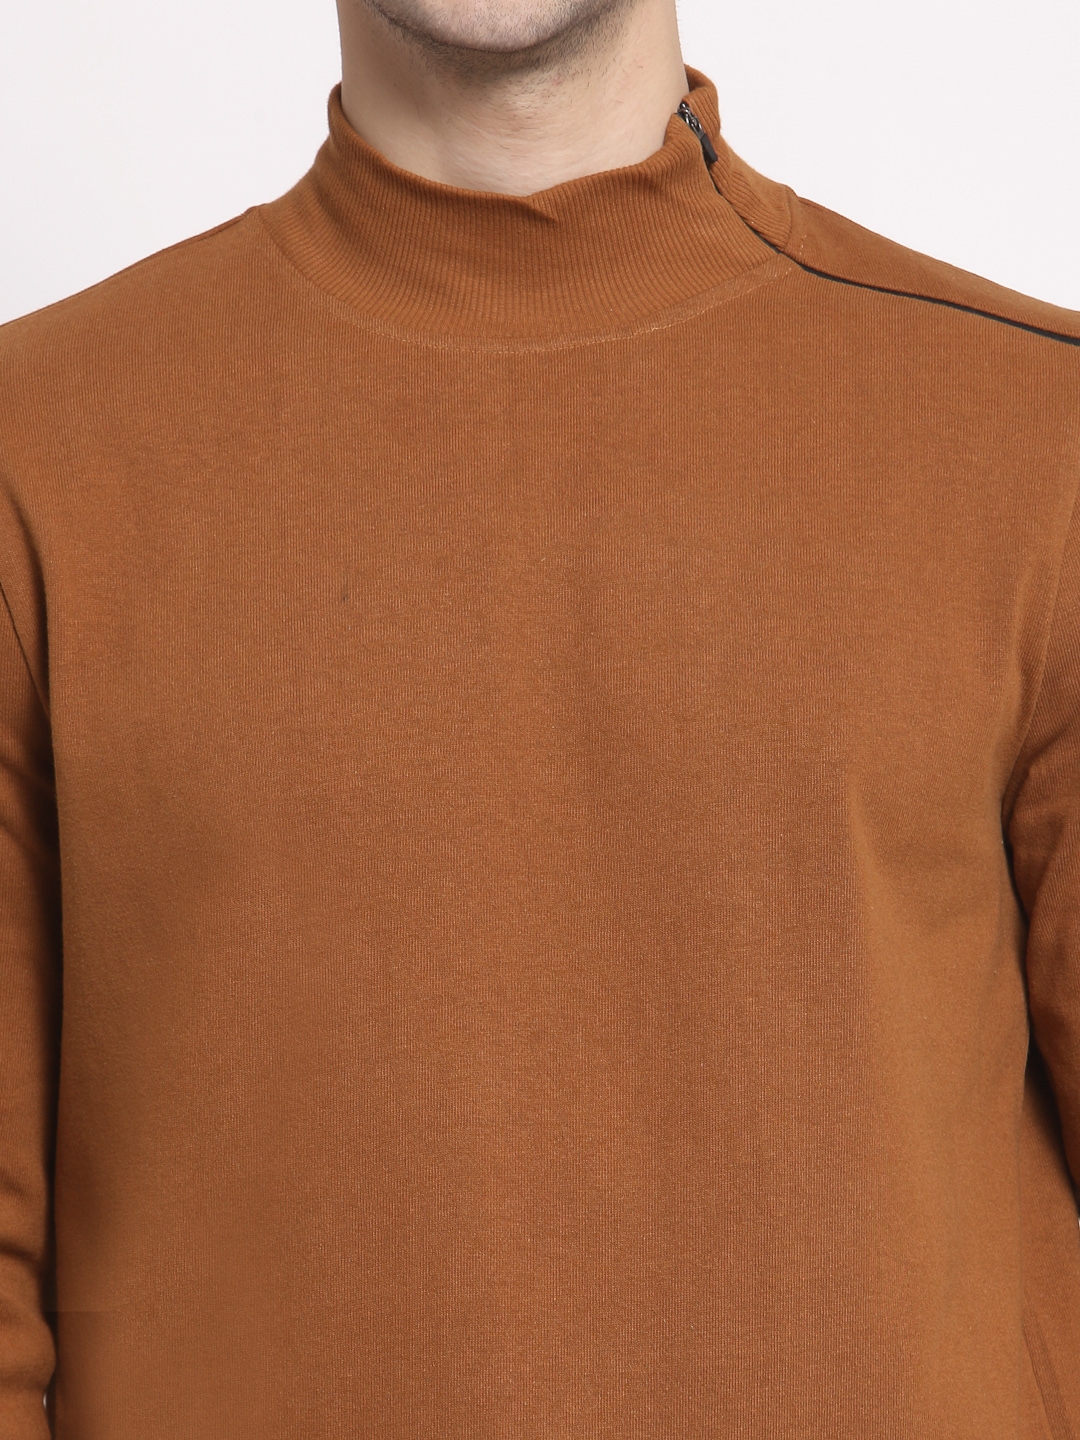 YOONOY | Men's Brown Cotton Solid Sweatshirts 4